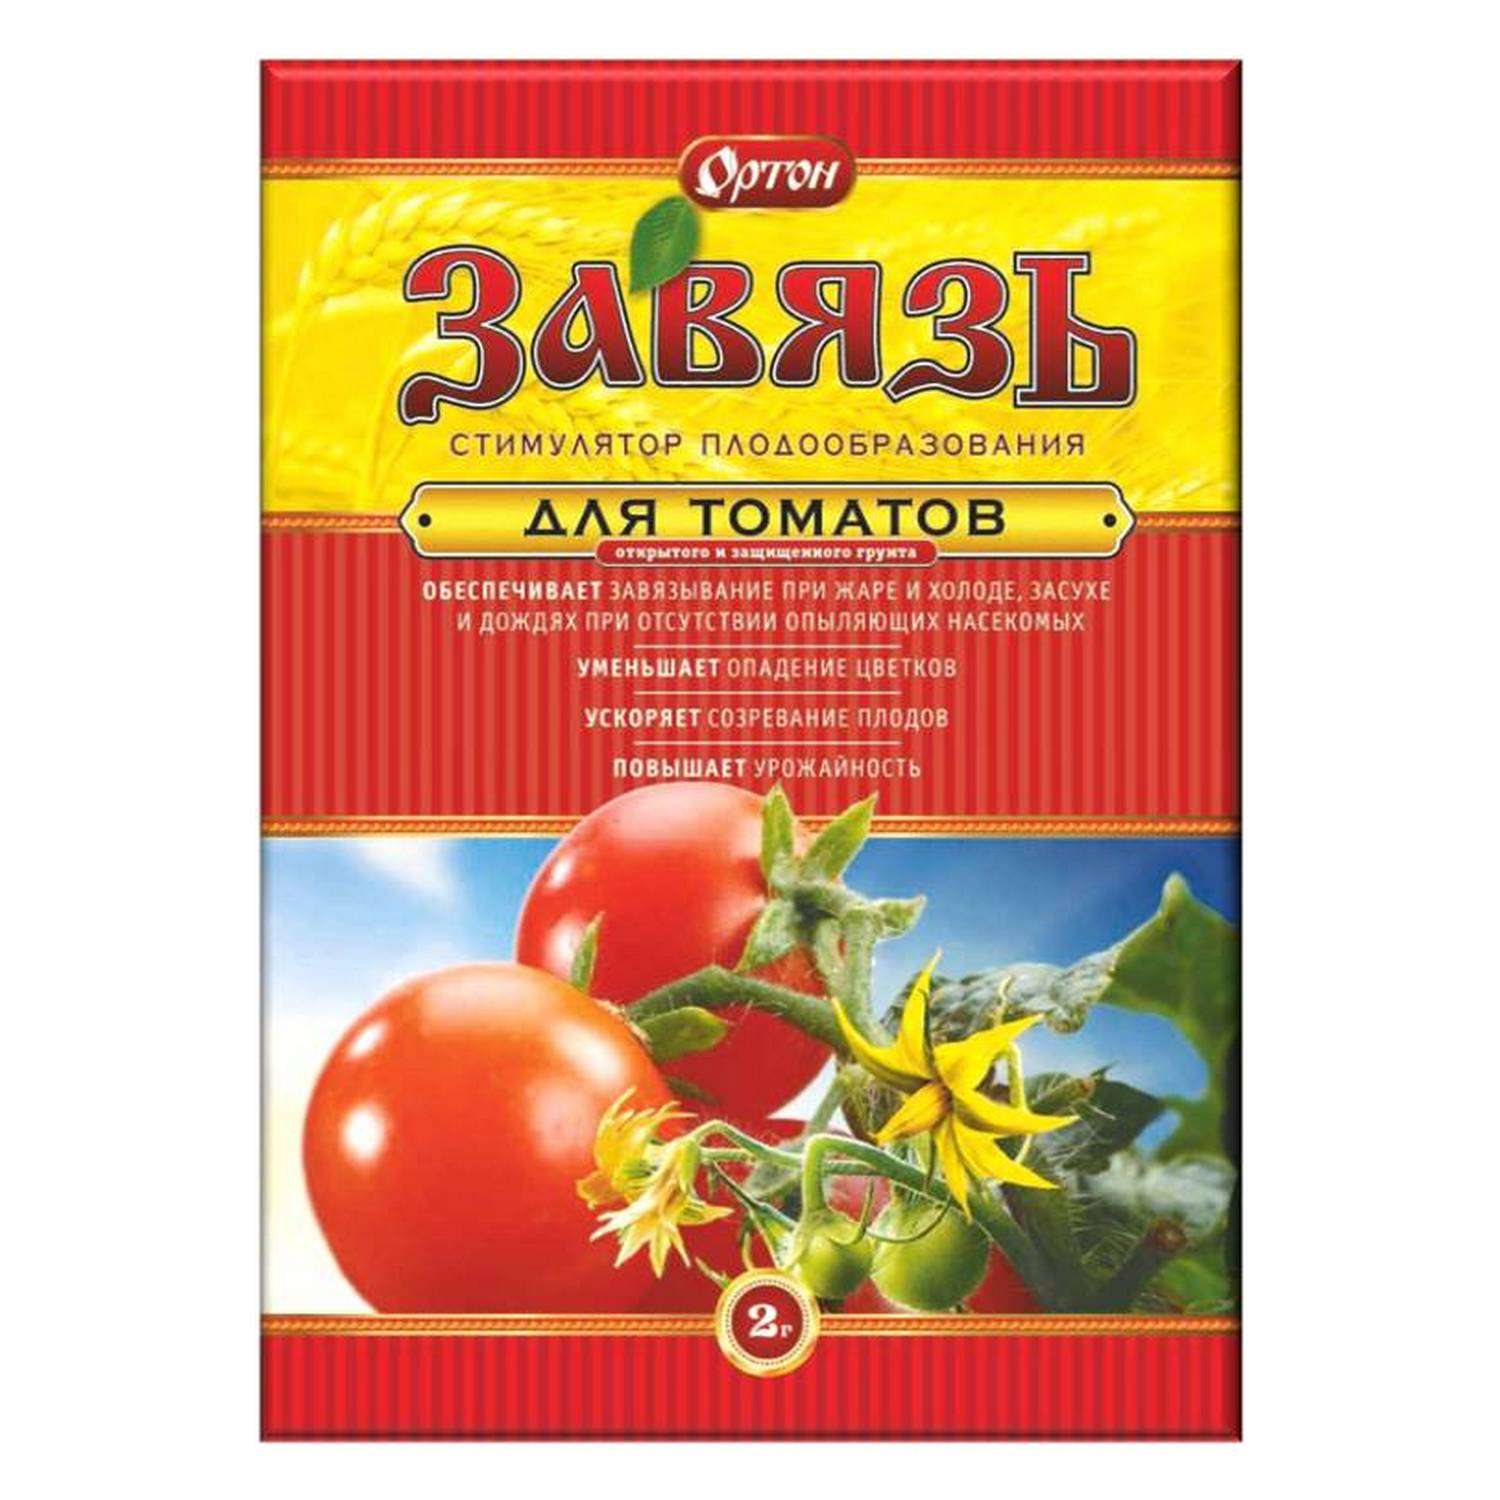 Стимулятор плодообразования Ортон Завязь для томатов 2г - фото 1